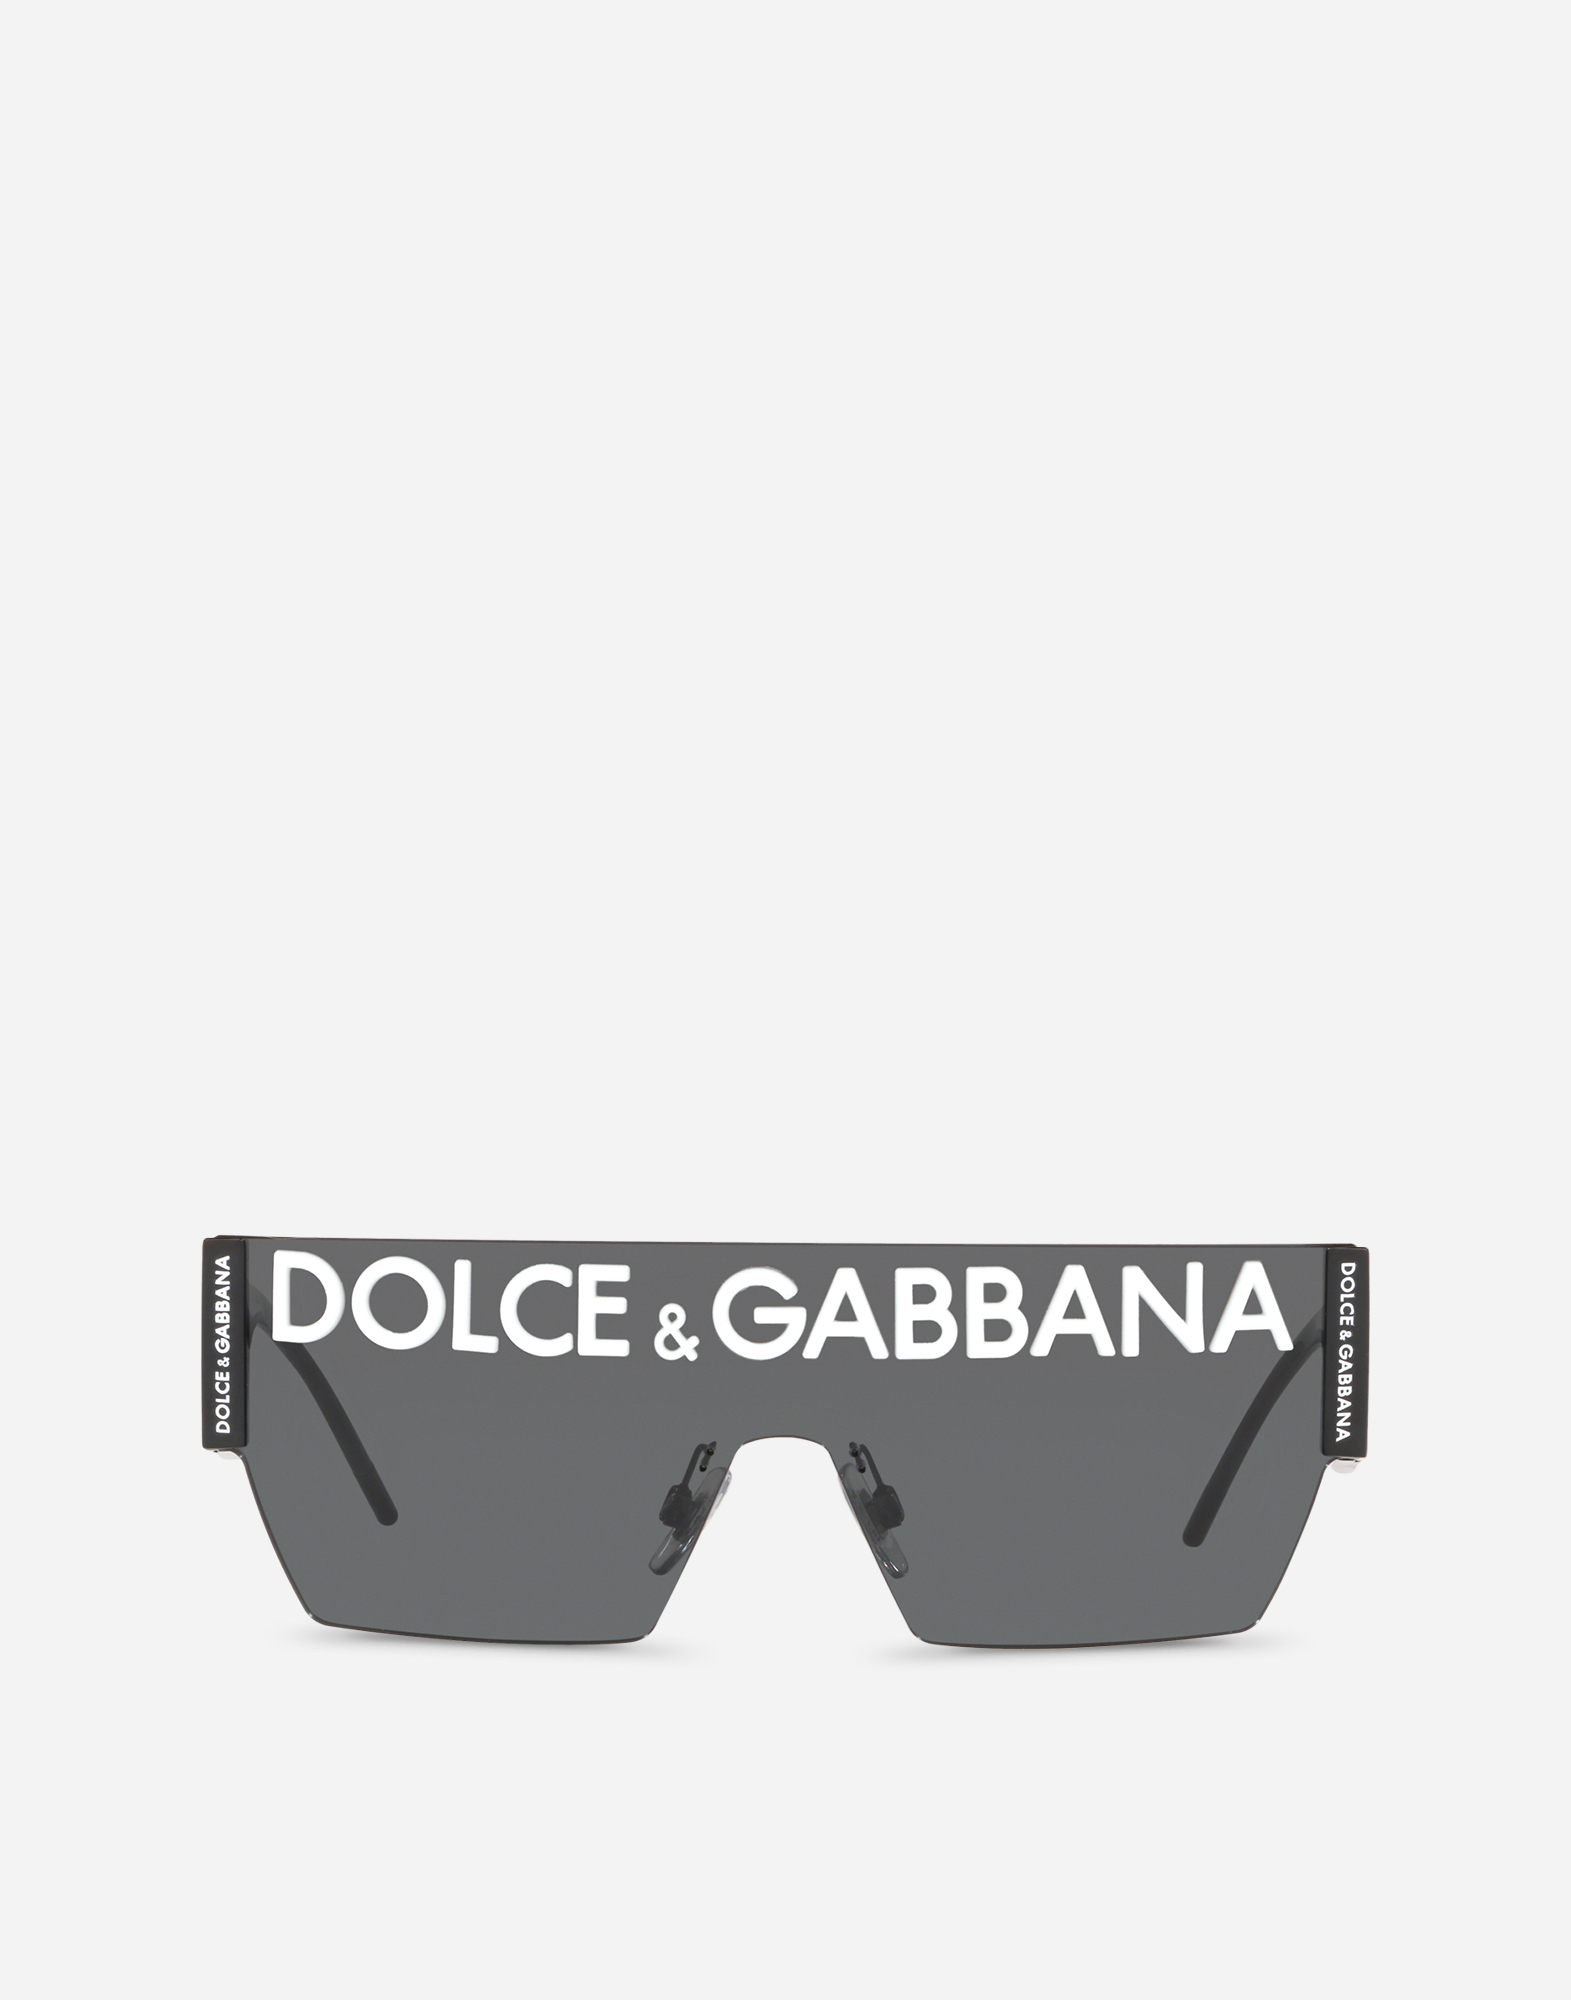 dolce & gabbana goggles price